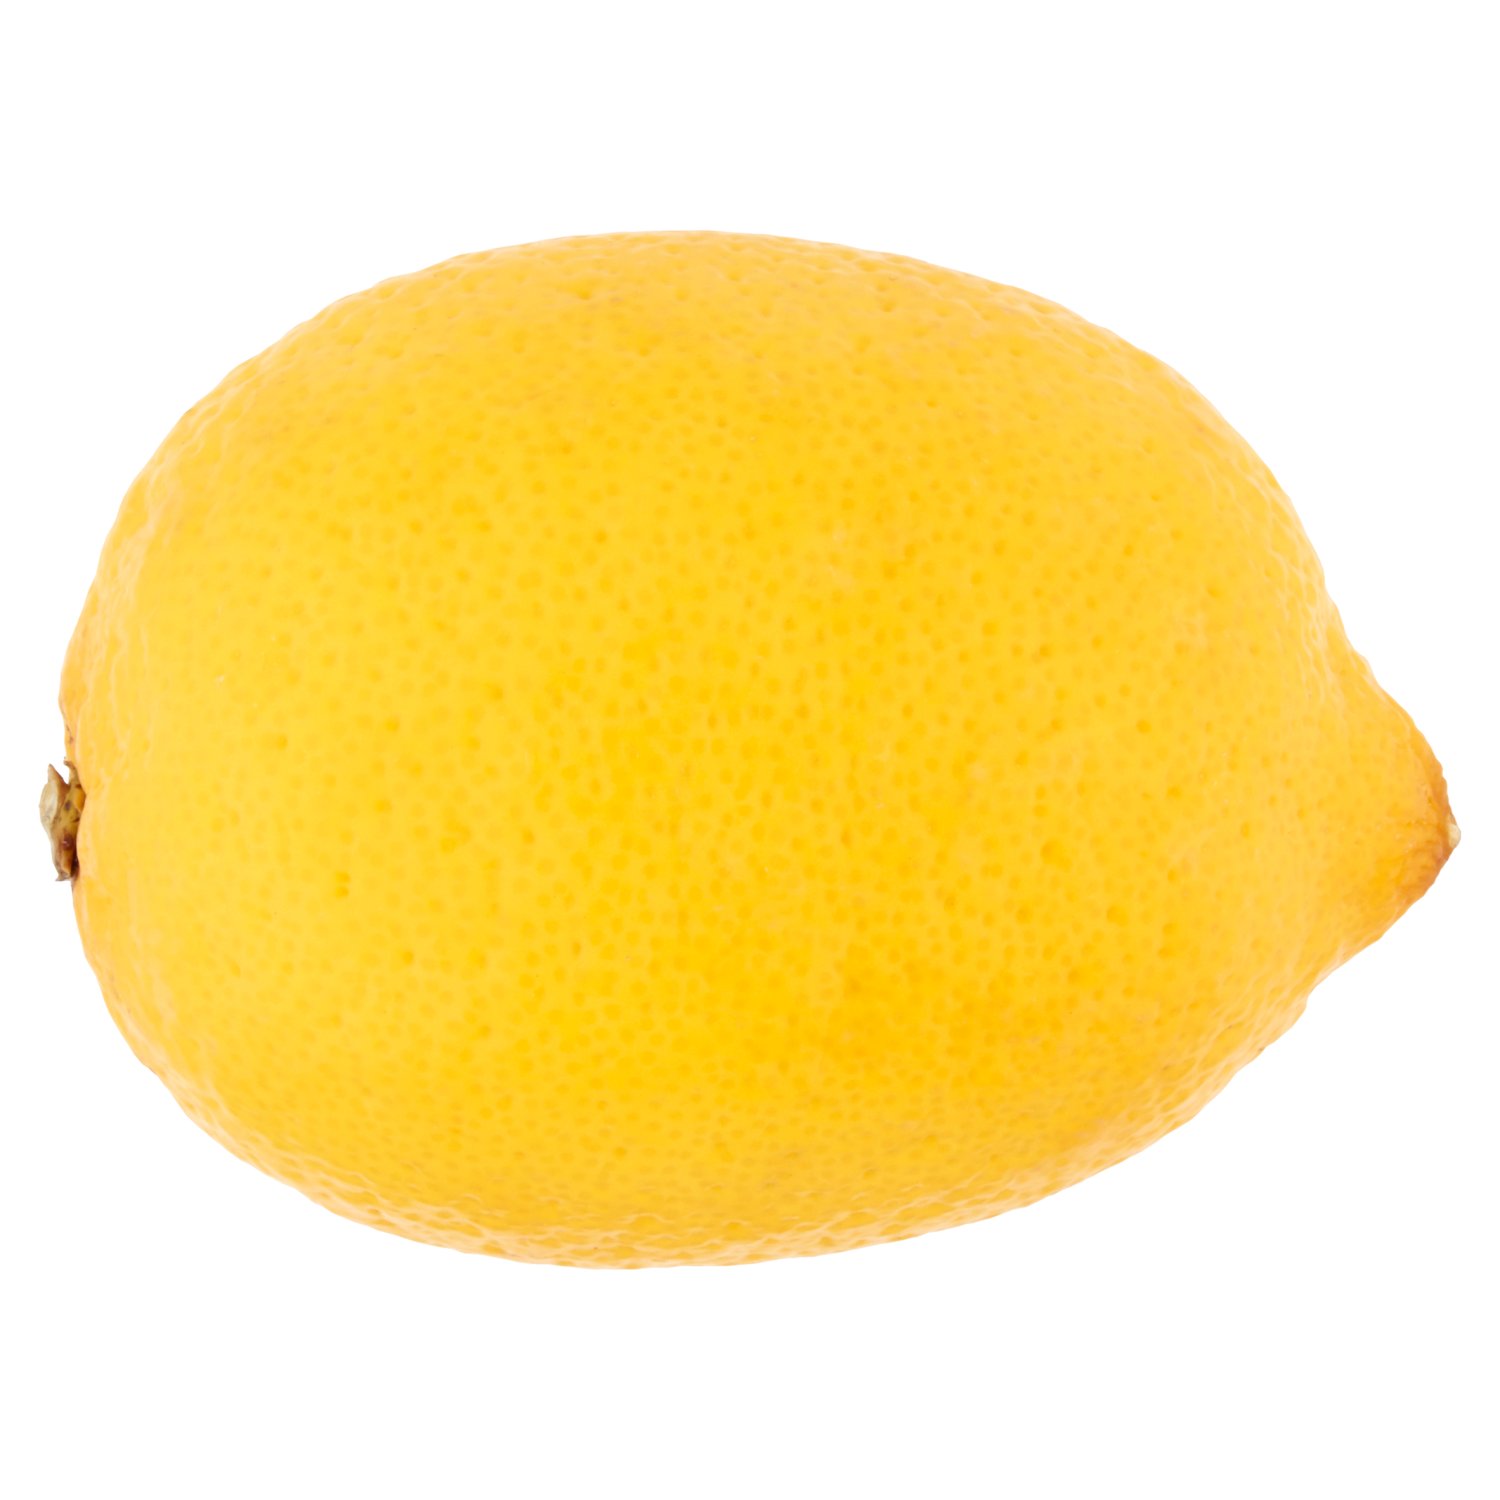 SuperValu Loose Lemons (1 Piece)